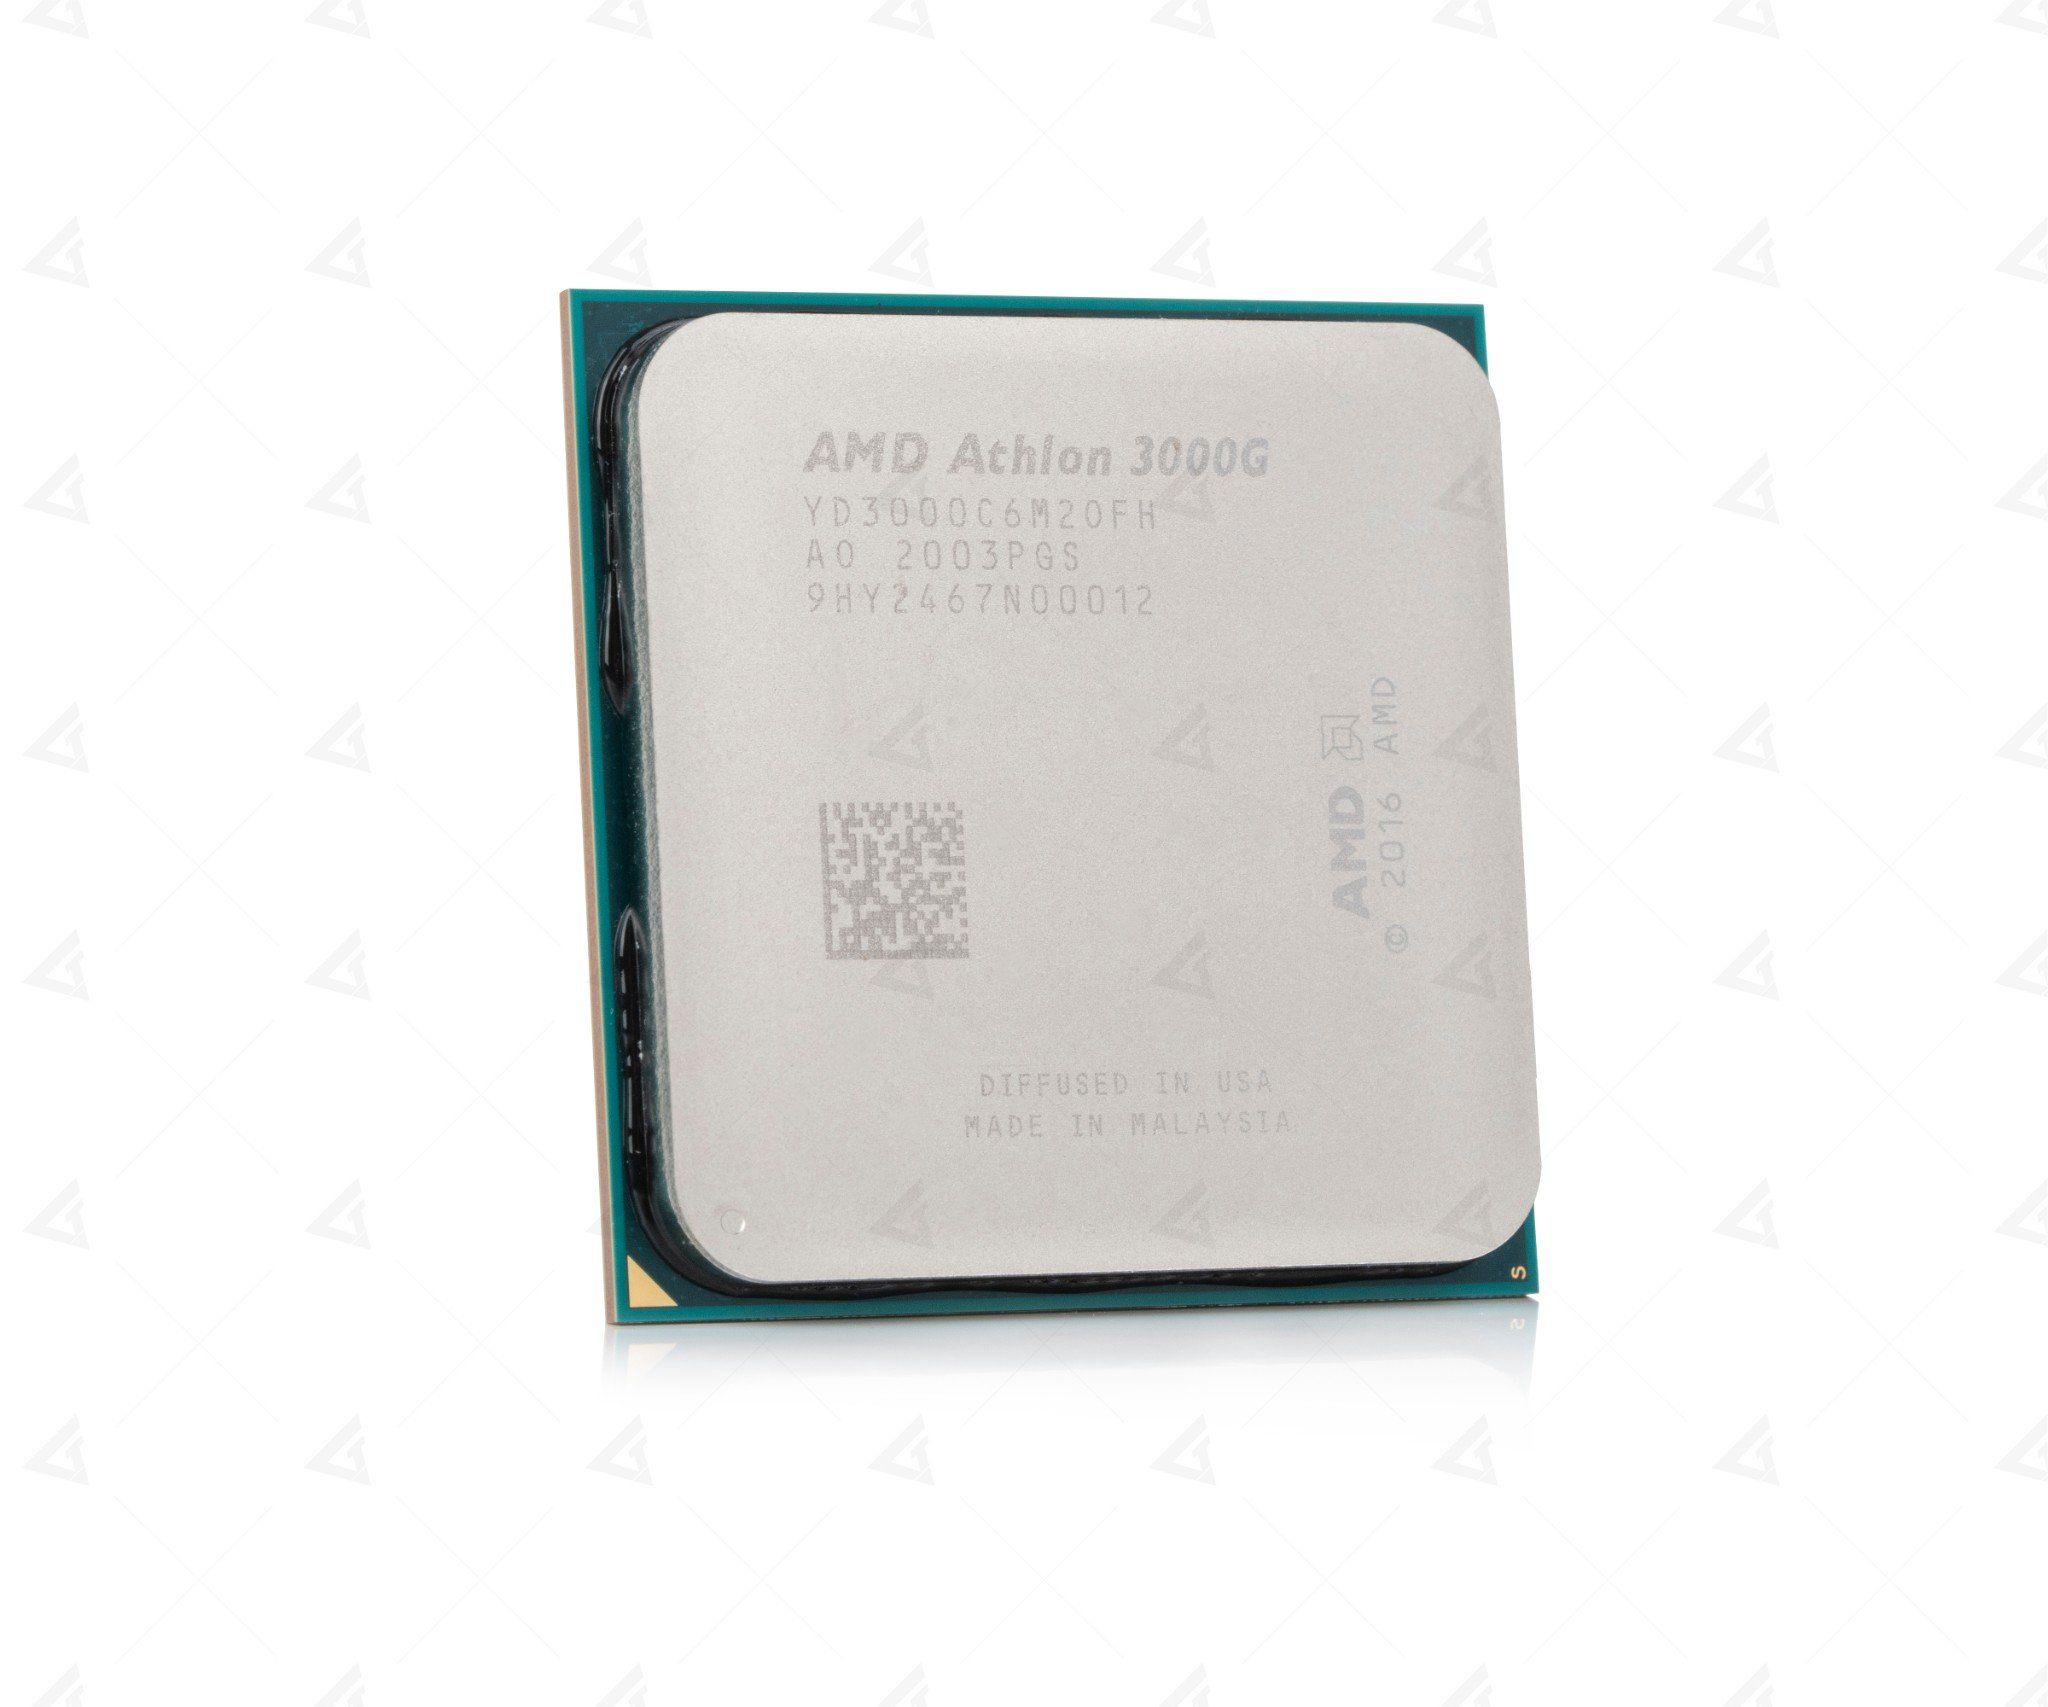 CPU AMD Athlon™ 3000G 3.5GHz Gen3 chính hãng, giá rẻ – GEARVN.COM